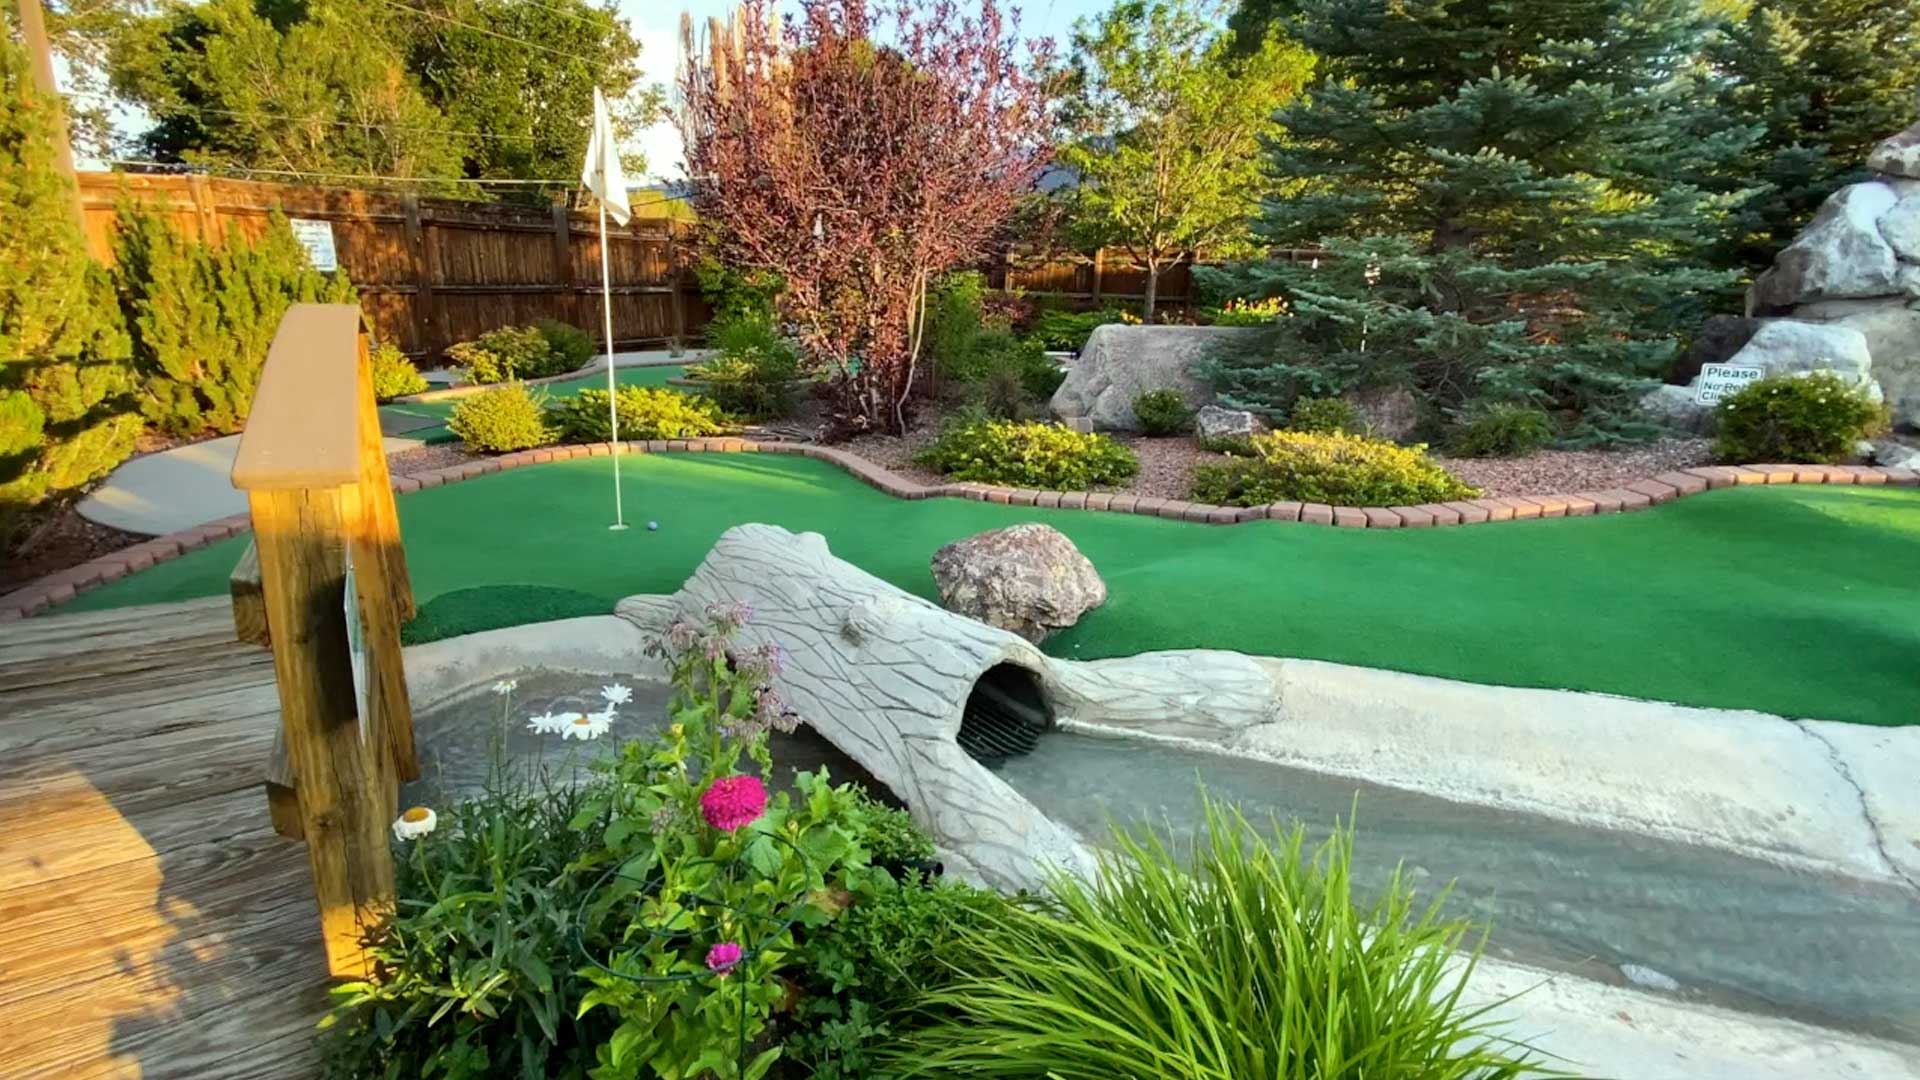 Miniature Golf & Hot Springs Salida, Colorado